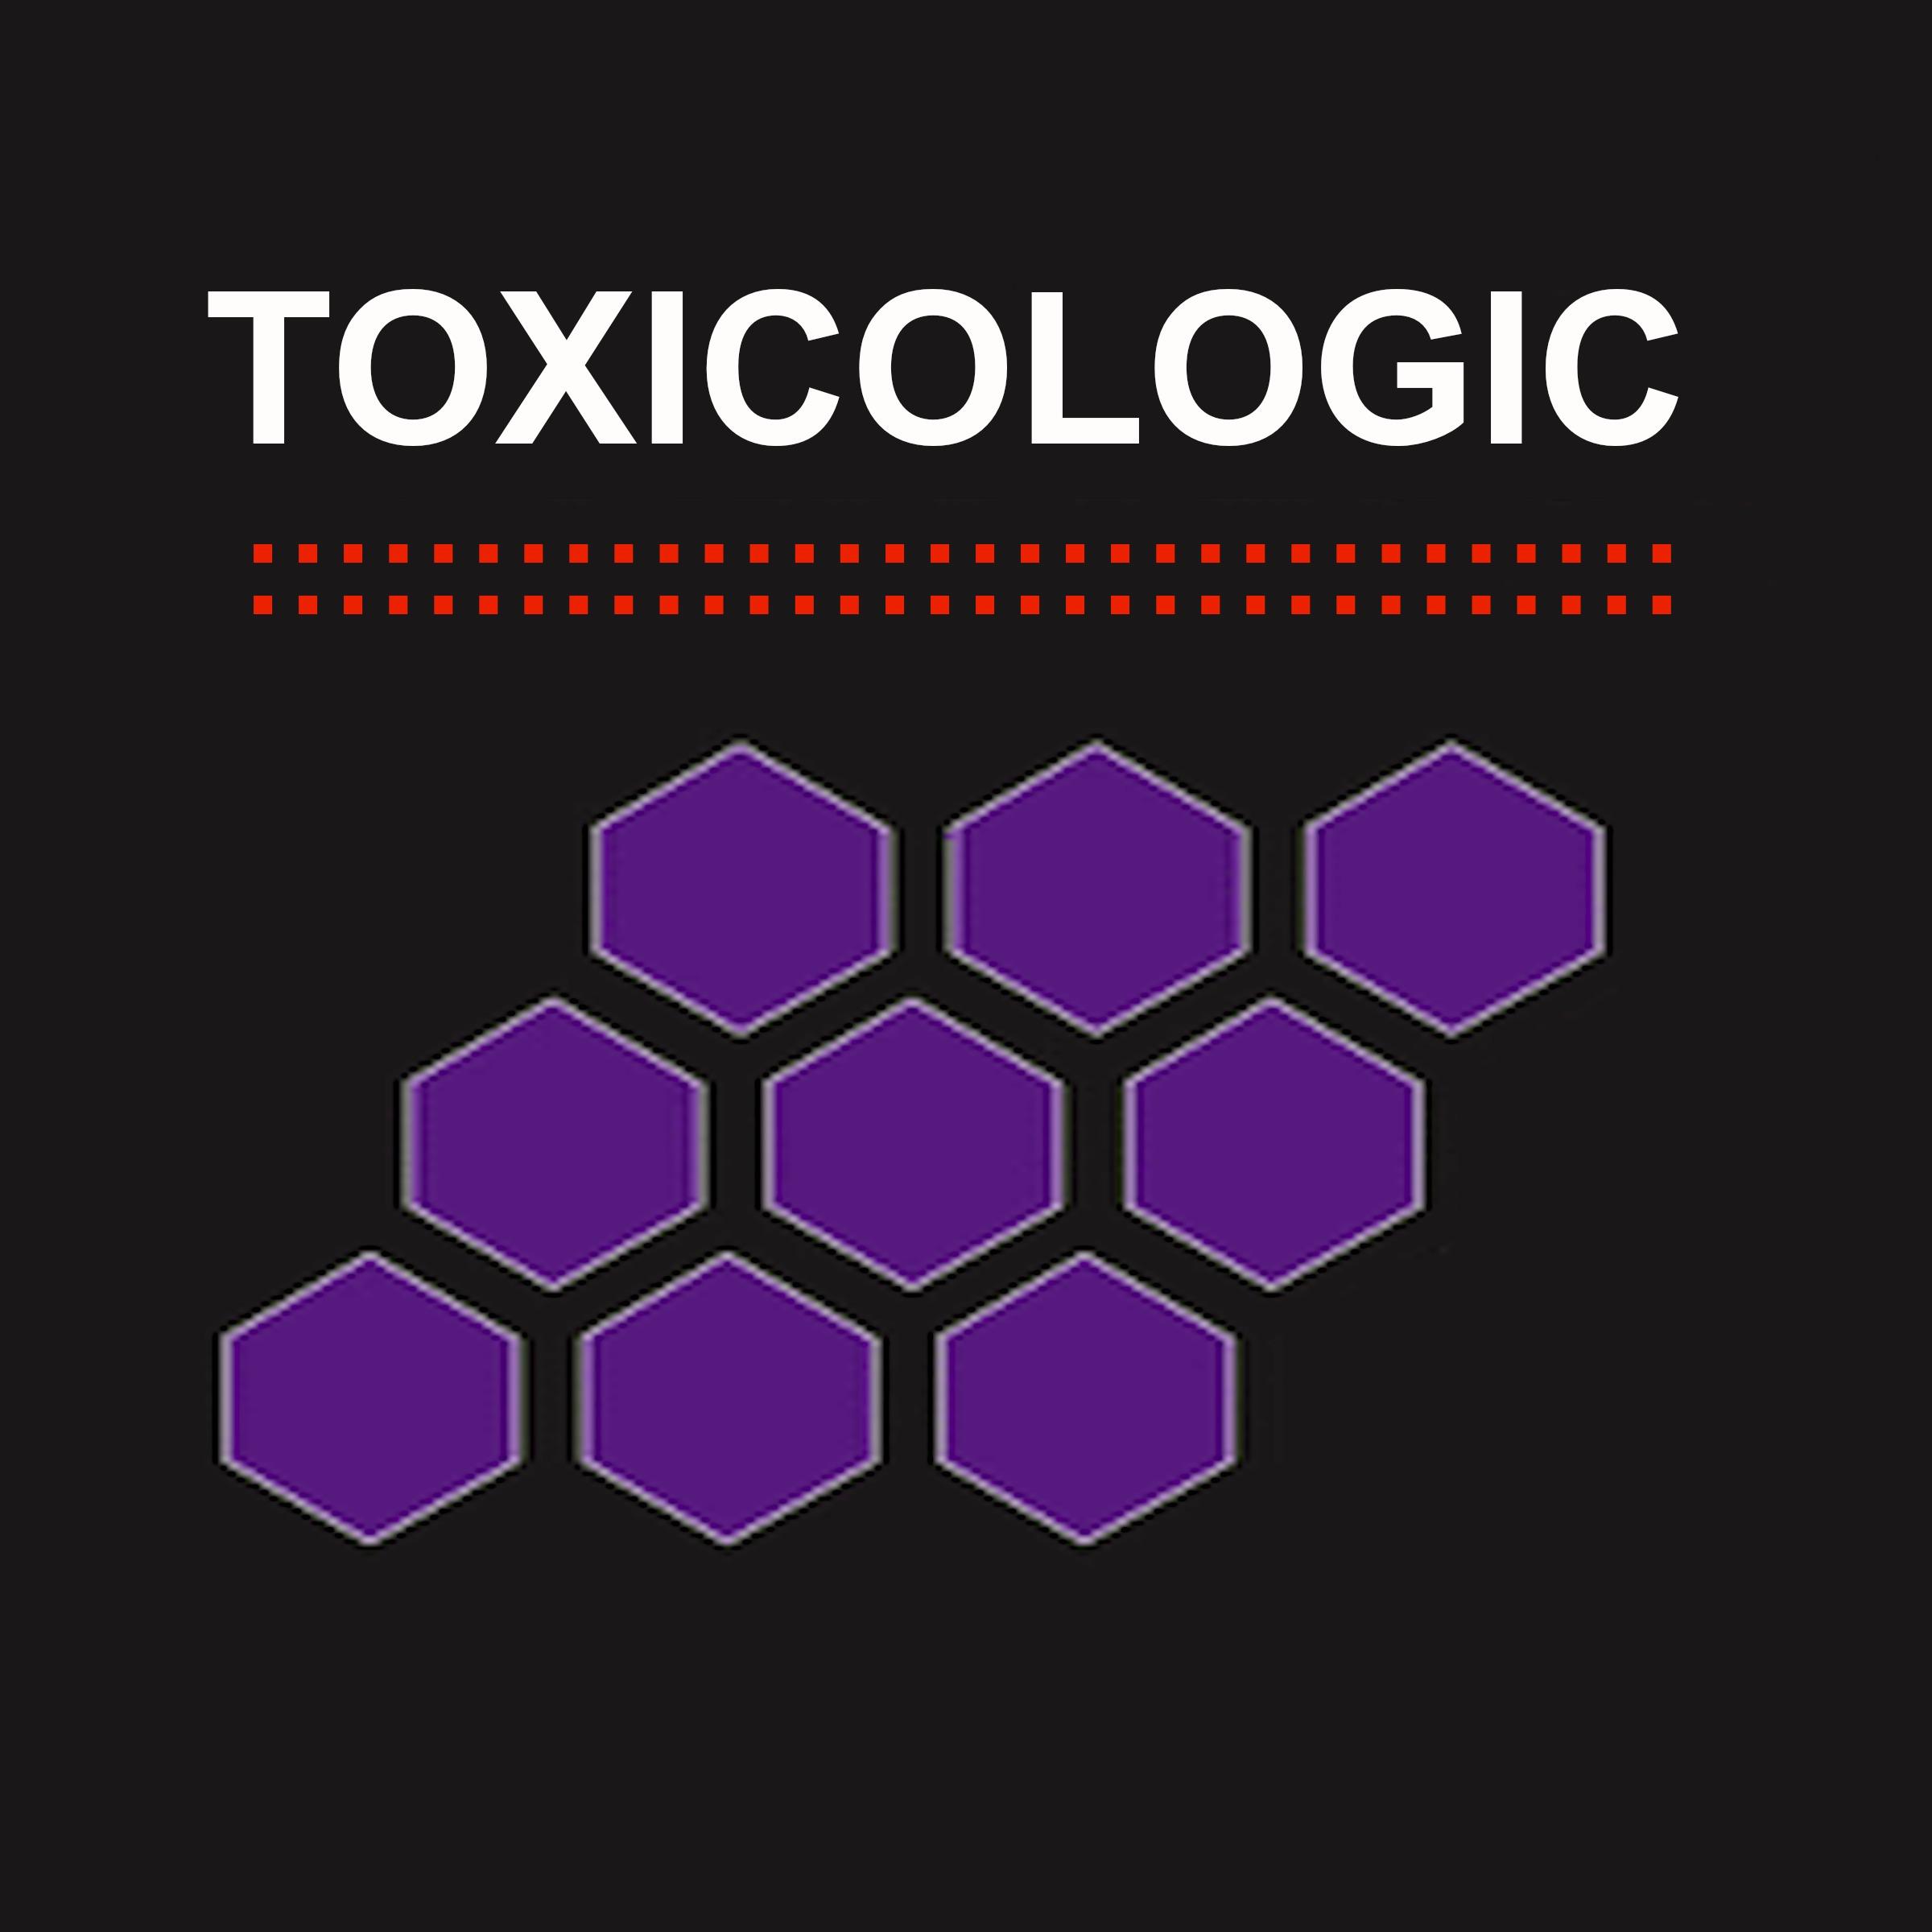 Toxicologic